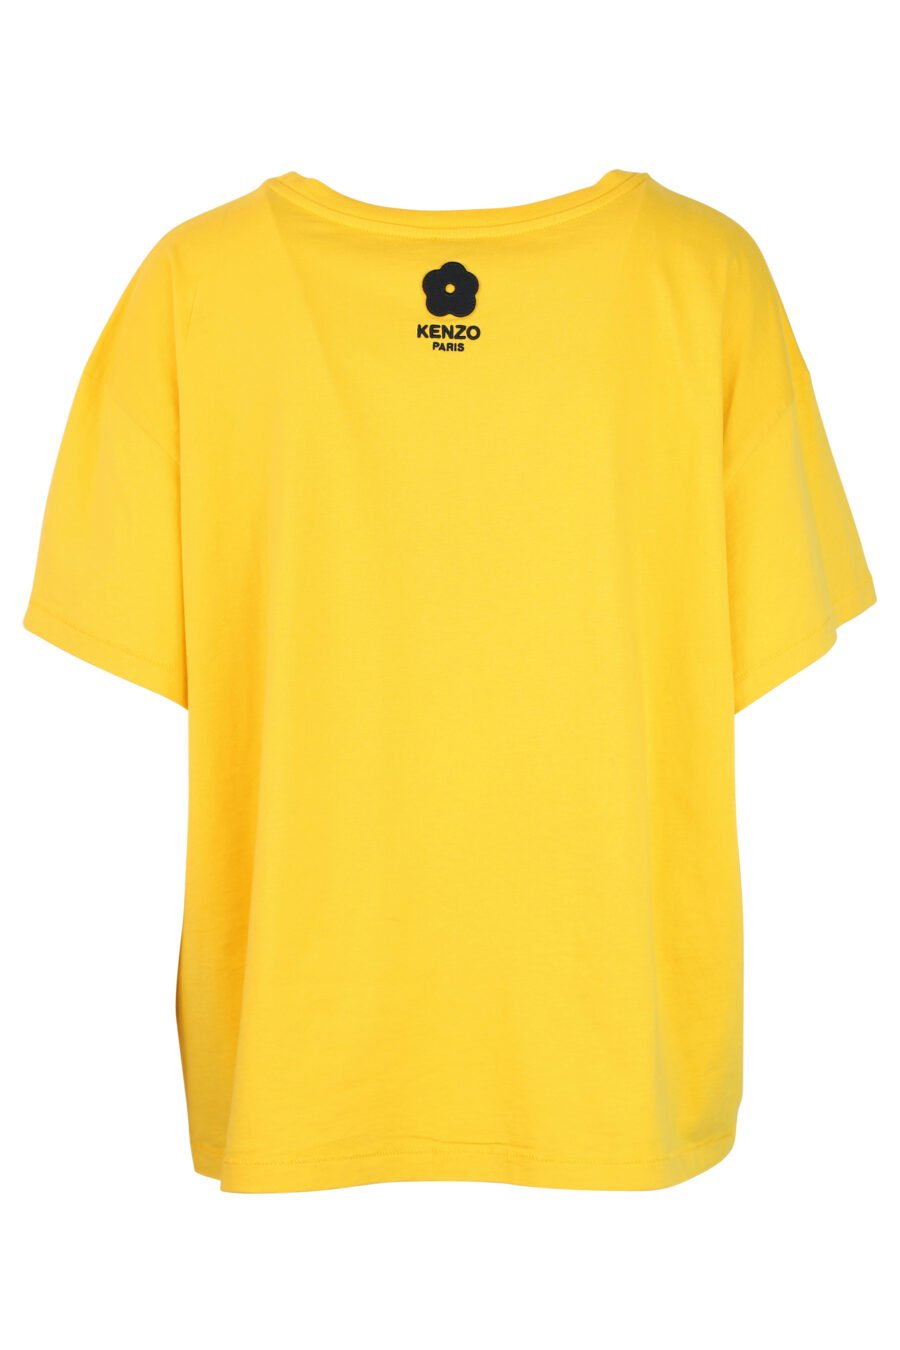 Yellow T-shirt with elephant maxilogo - 3612230460065 2